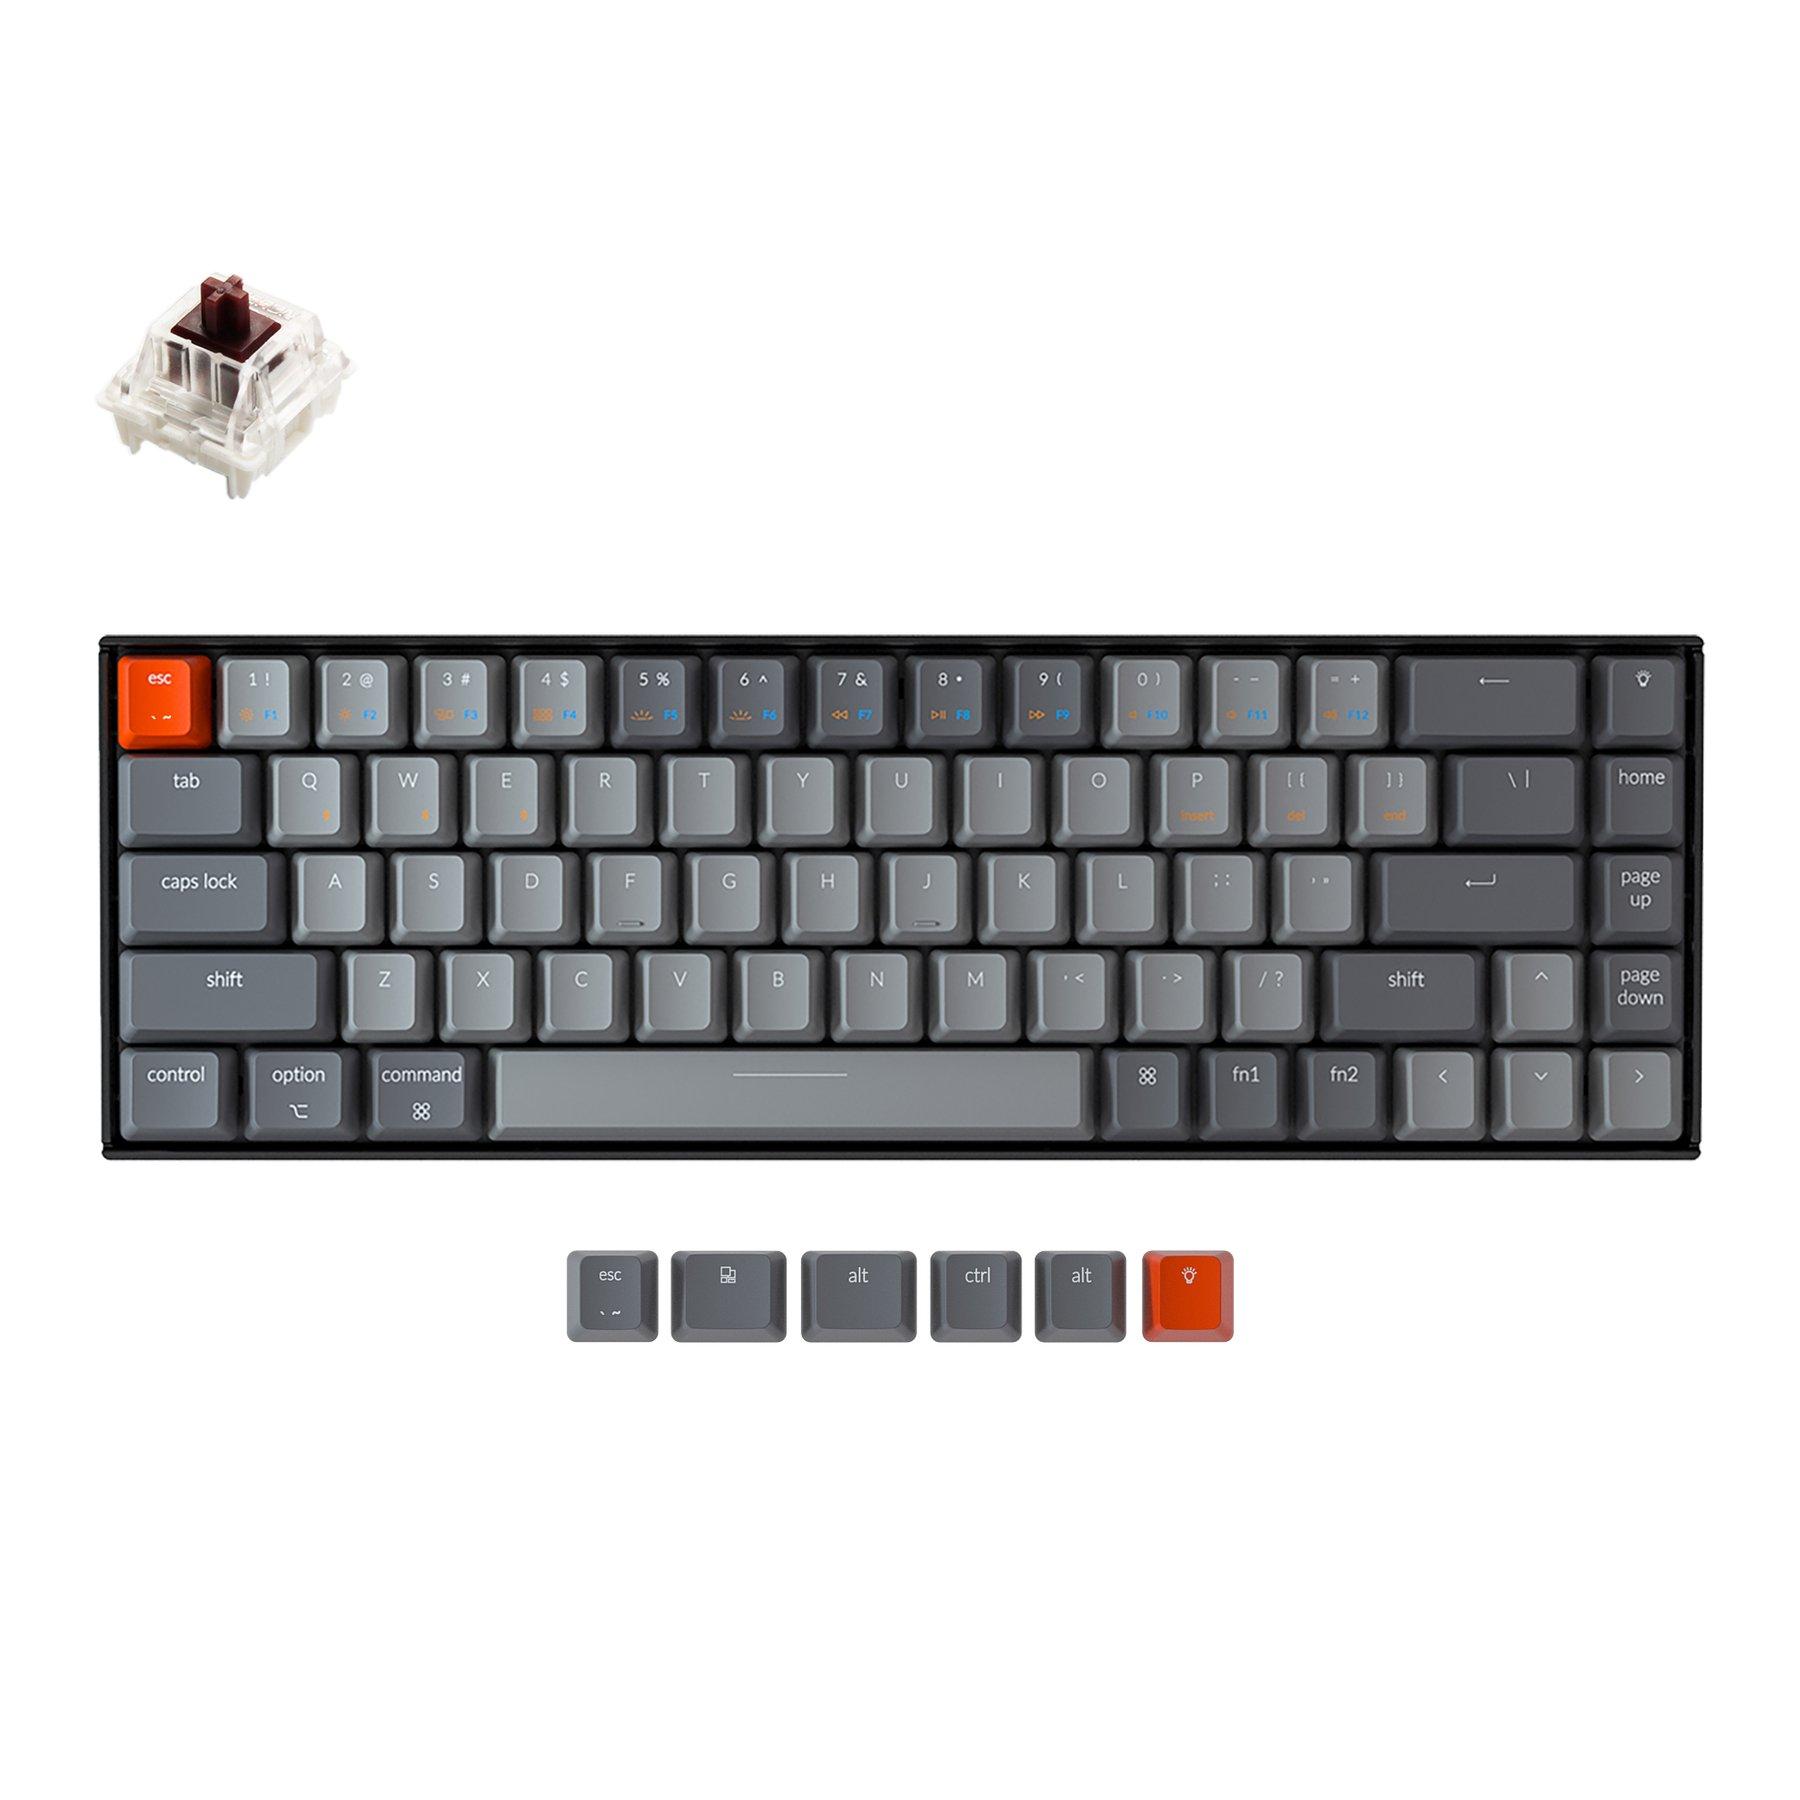 لوحة مفاتيح بإضائة آر جي بي K6 68 Gateron Mechanical Keyboard with RGB and Aluminum Frame - Keychron